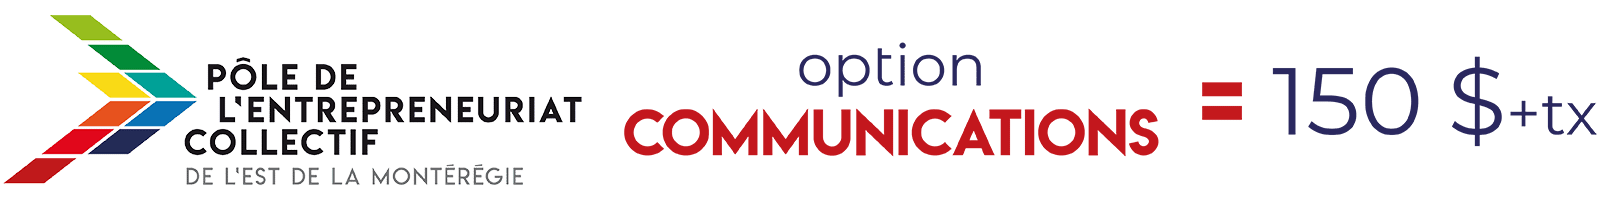 Membership_option_communications